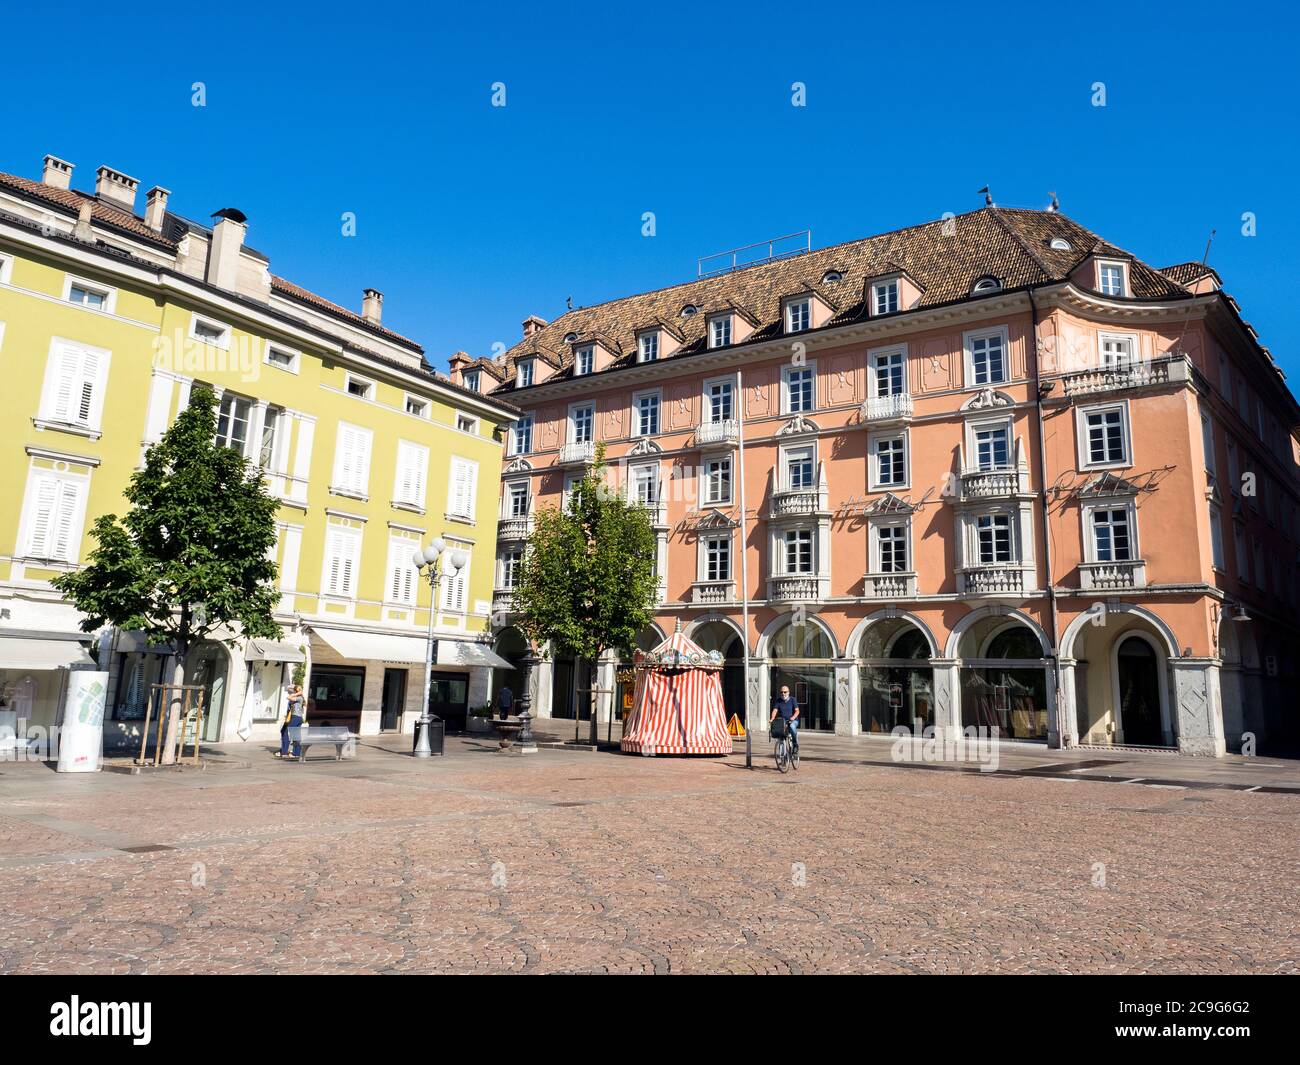 Walther square in Bozen - Italy Stock Photo